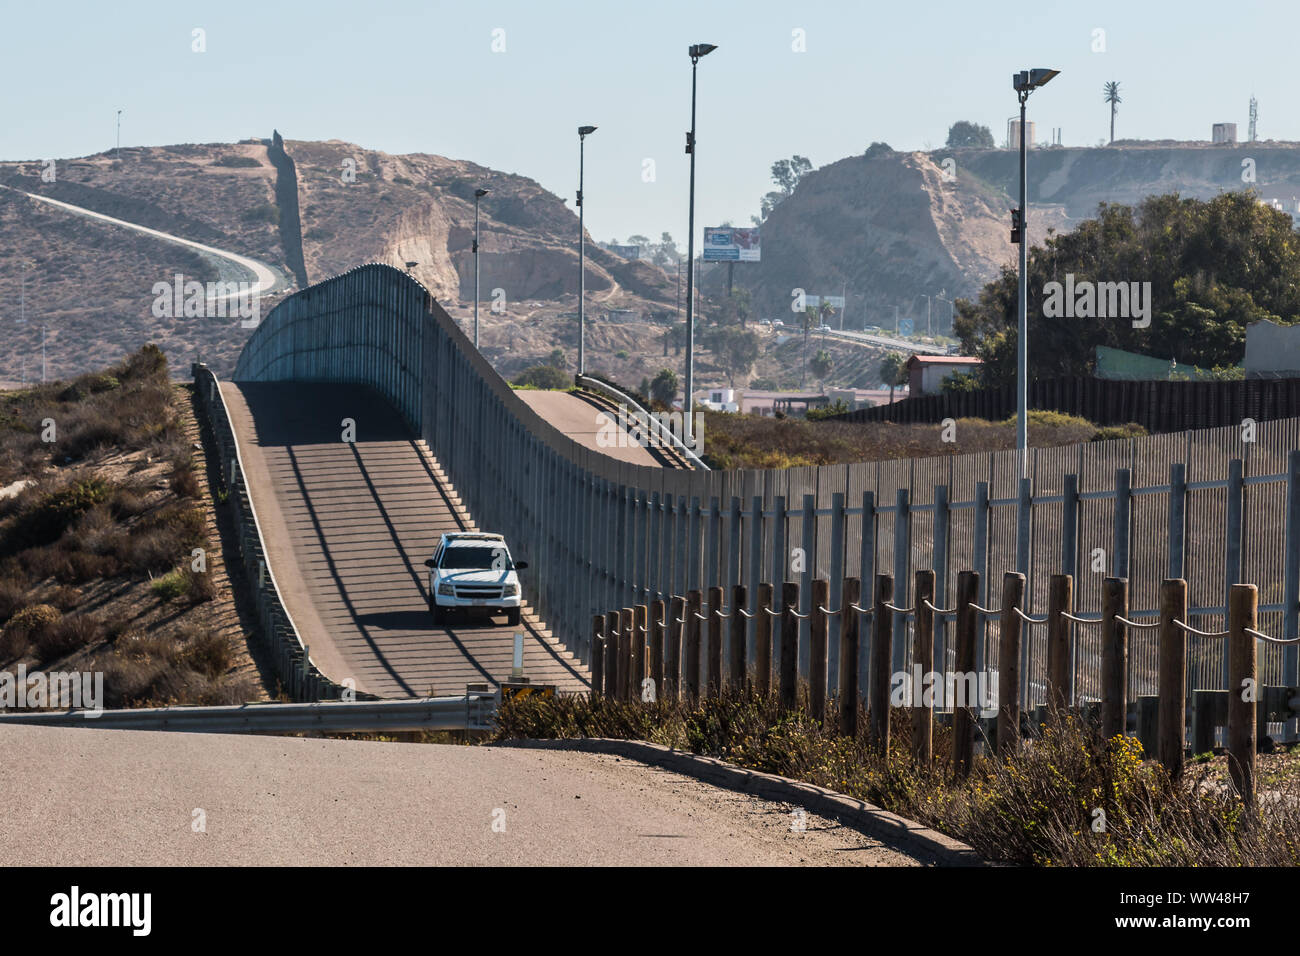 Border Patrol vehicle patrolling along the fence of the international border between San Diego, California and Tijuana, Mexico Stock Photo